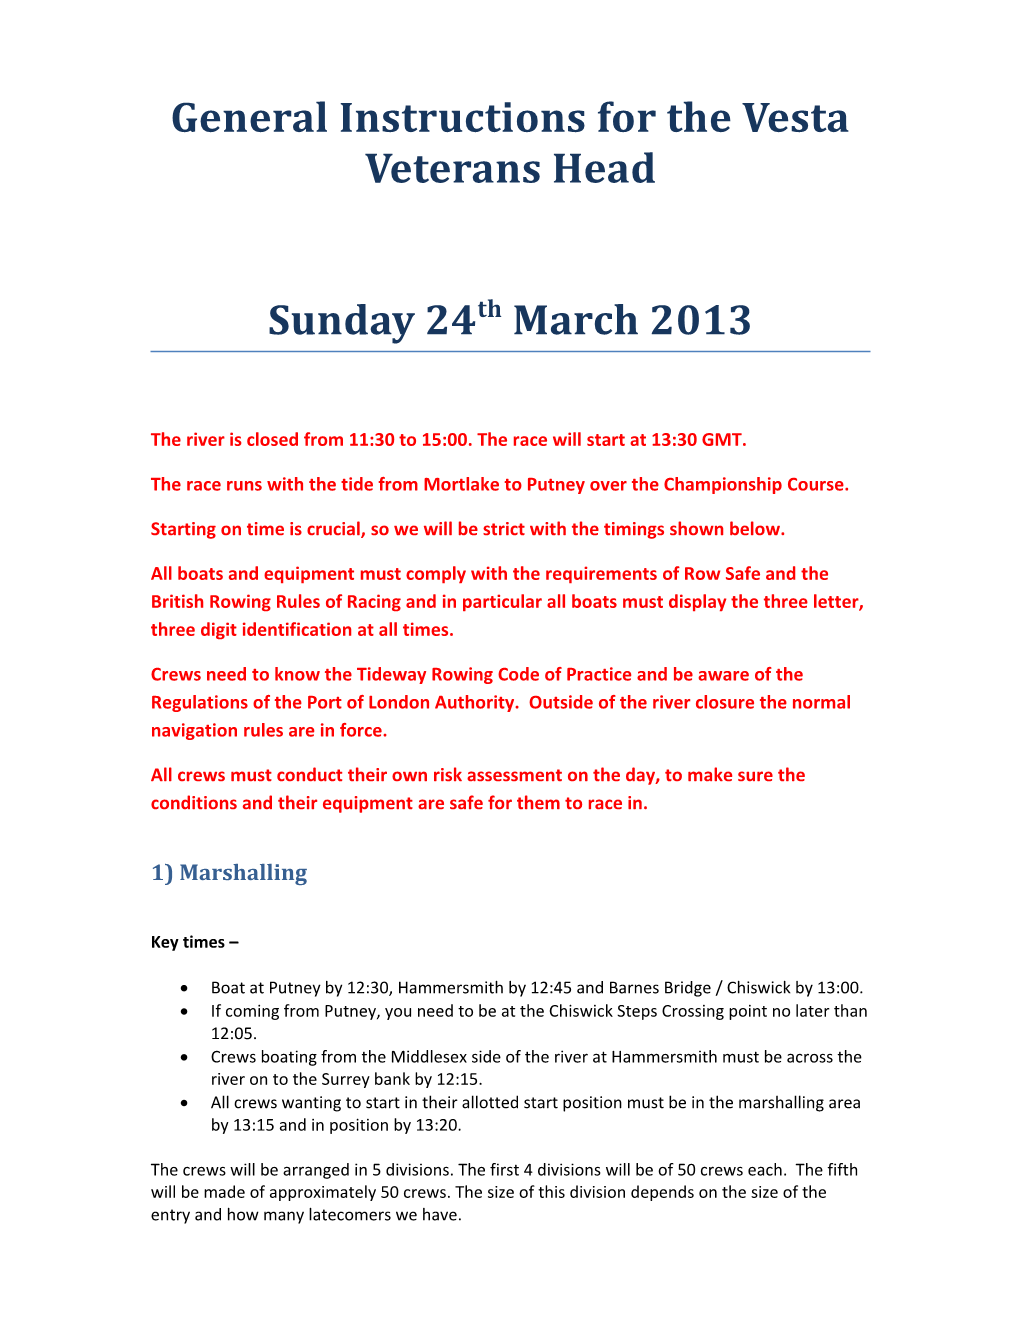 General Instructions for the Vesta Veterans Head